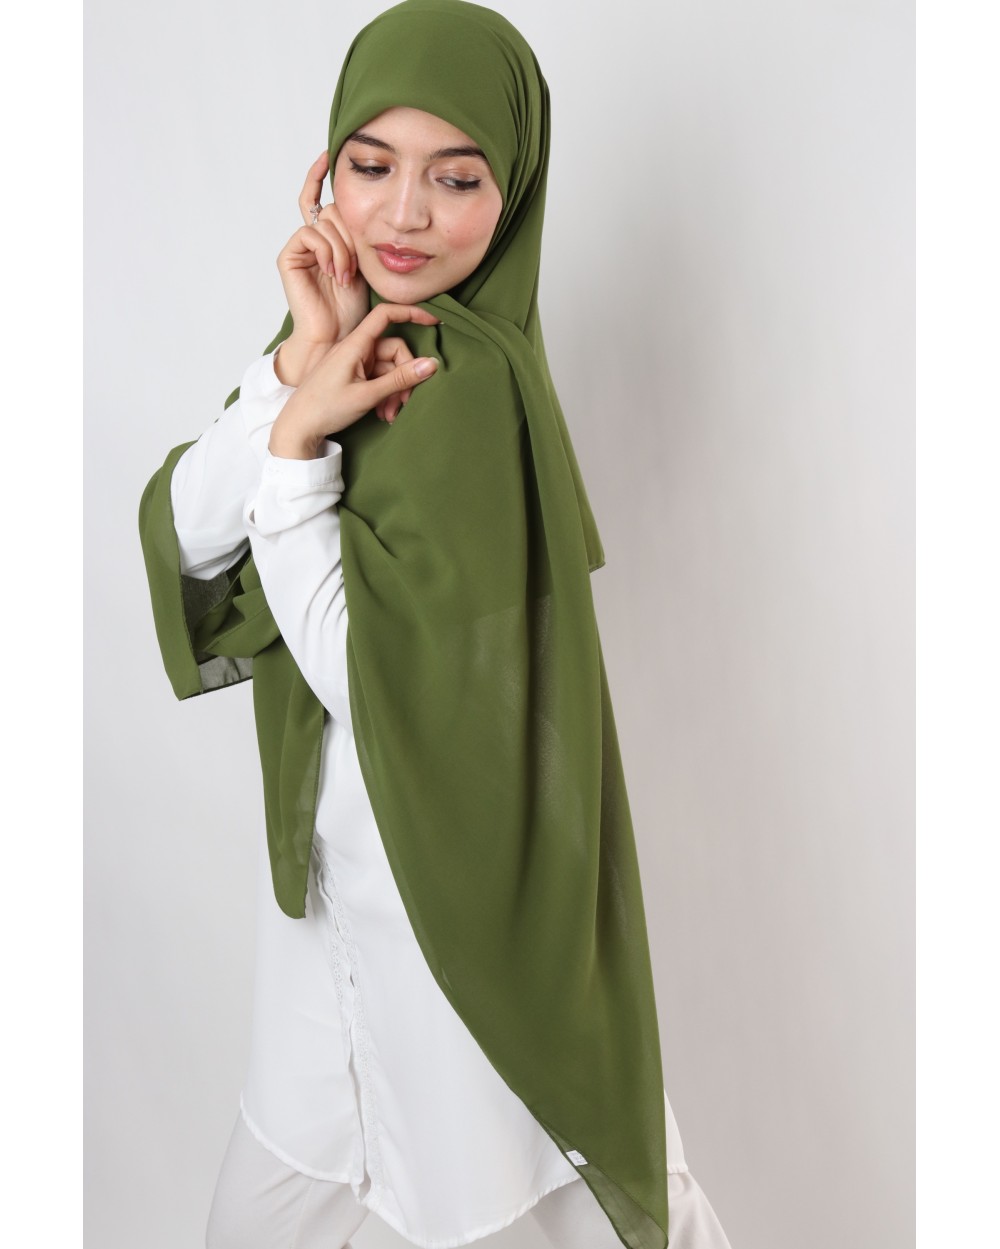 Nissa square chiffon hijab 150cm